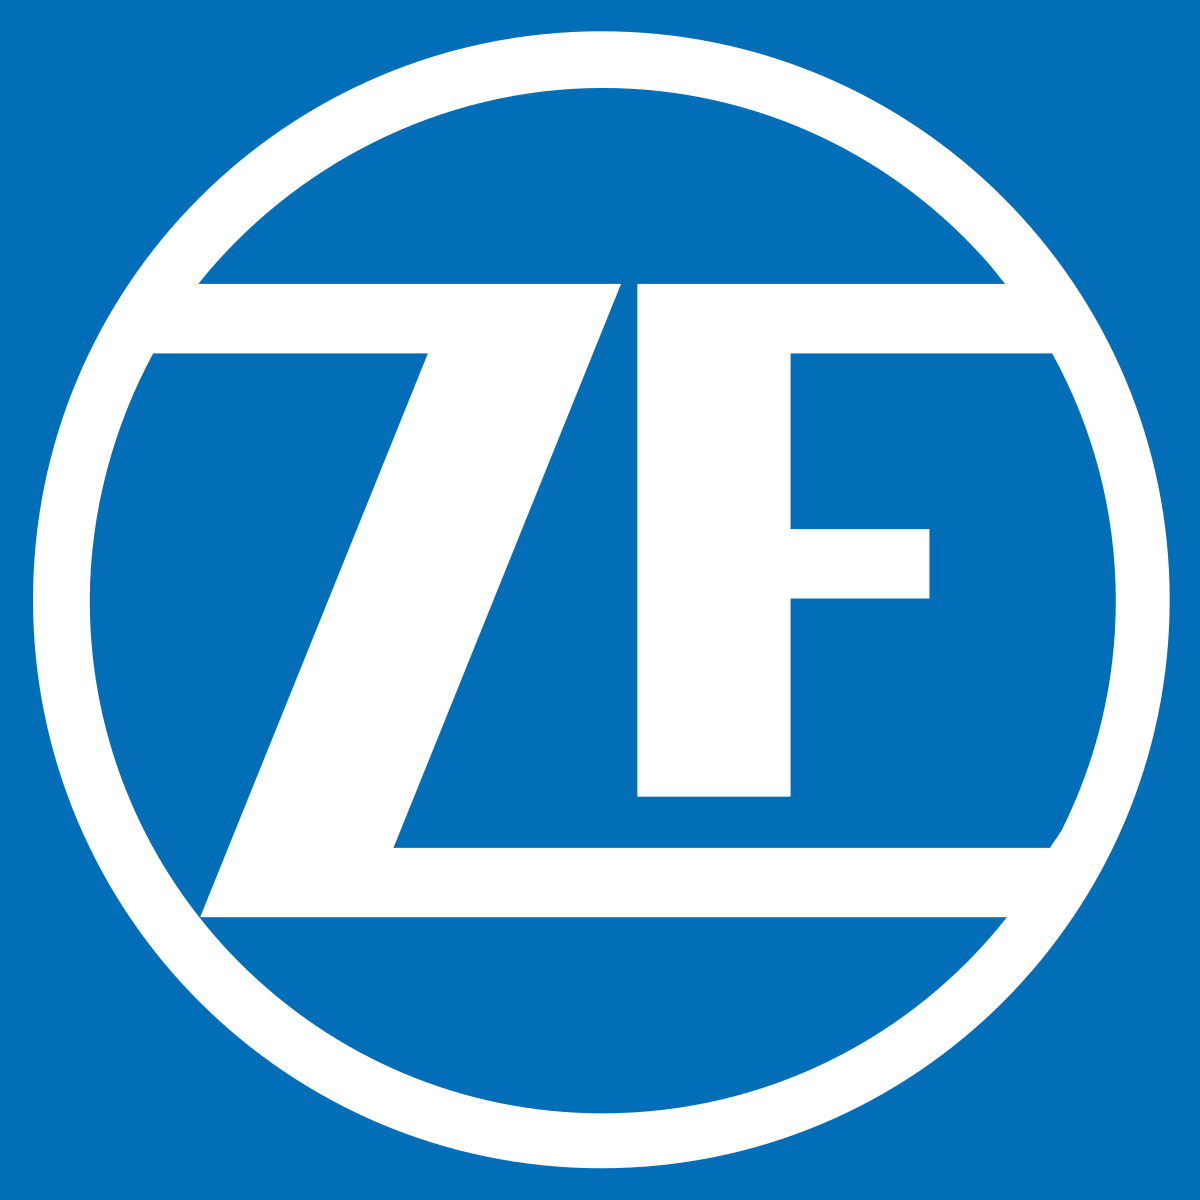 Zf 2018 Marine Transmission Manual